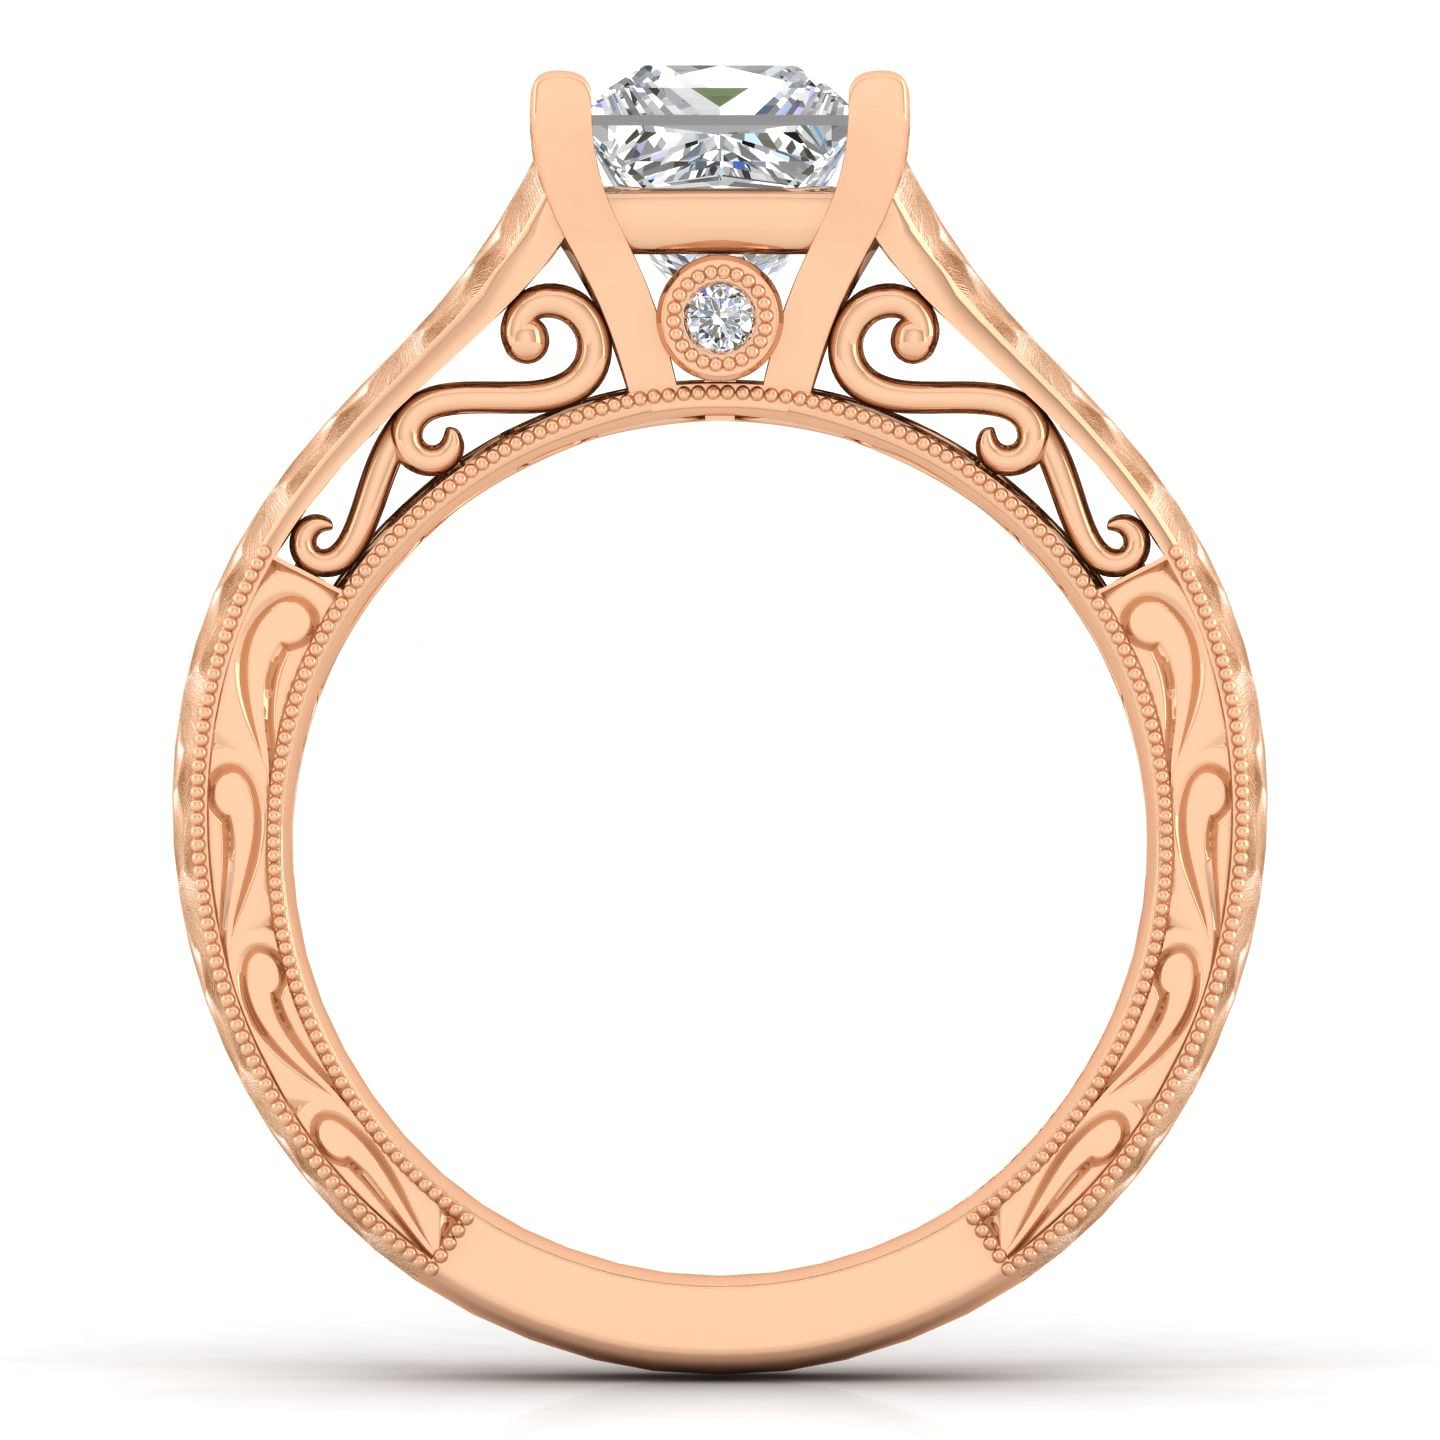 Vintage Inspired 14K Rose Gold Princess Cut Diamond Engagement Ring